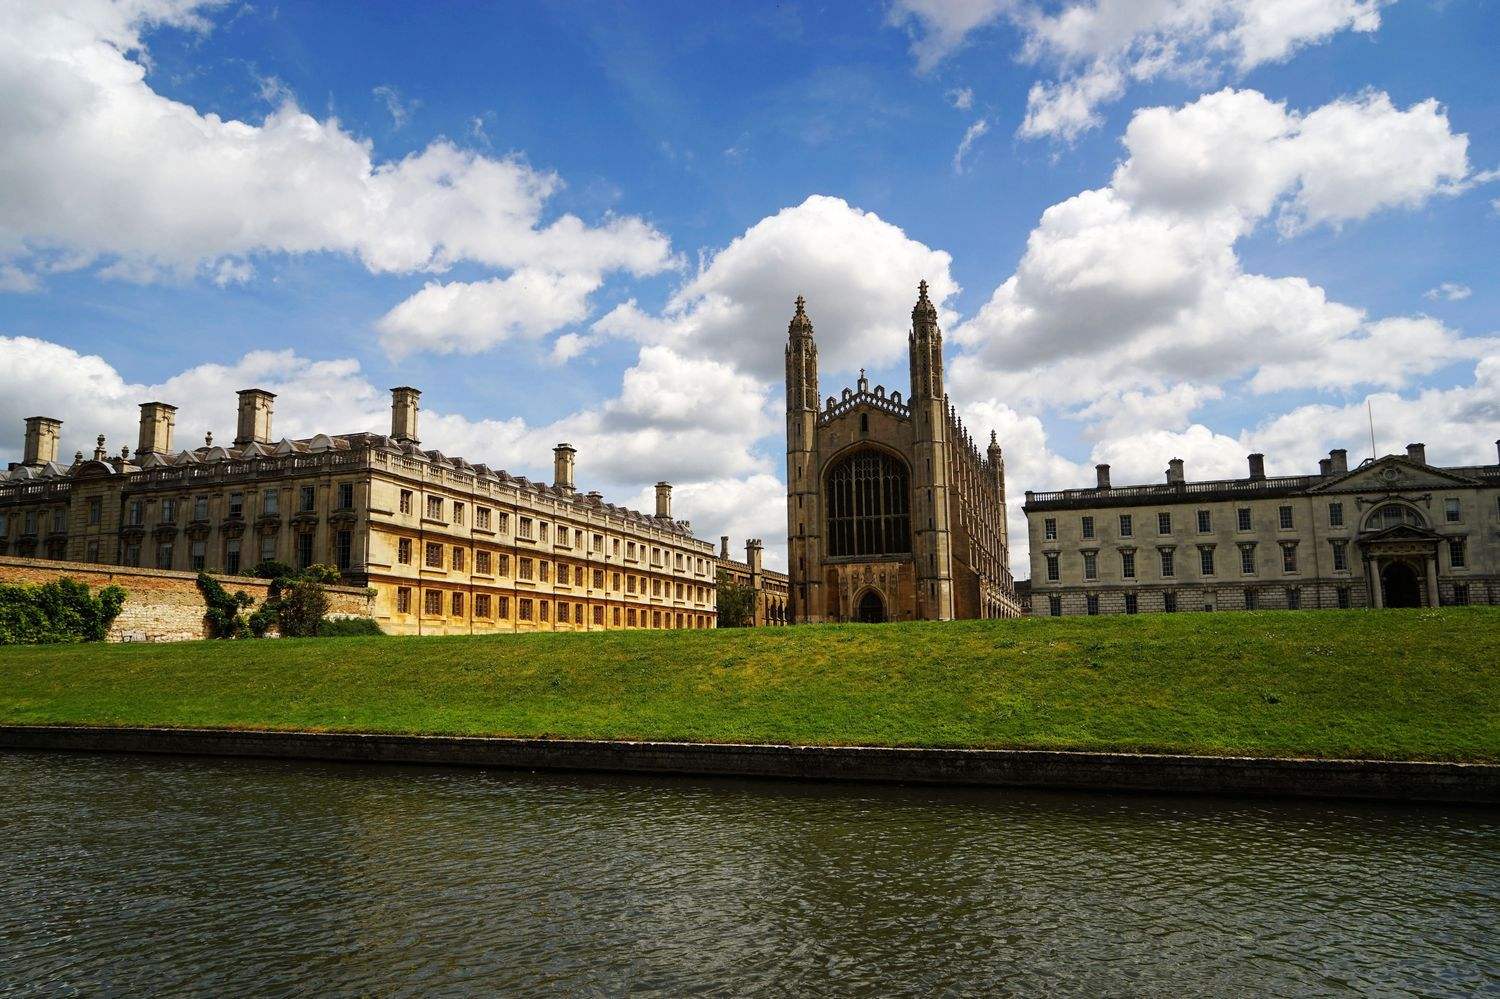 File photo of Cambridge University [Photo: youctrip.com]